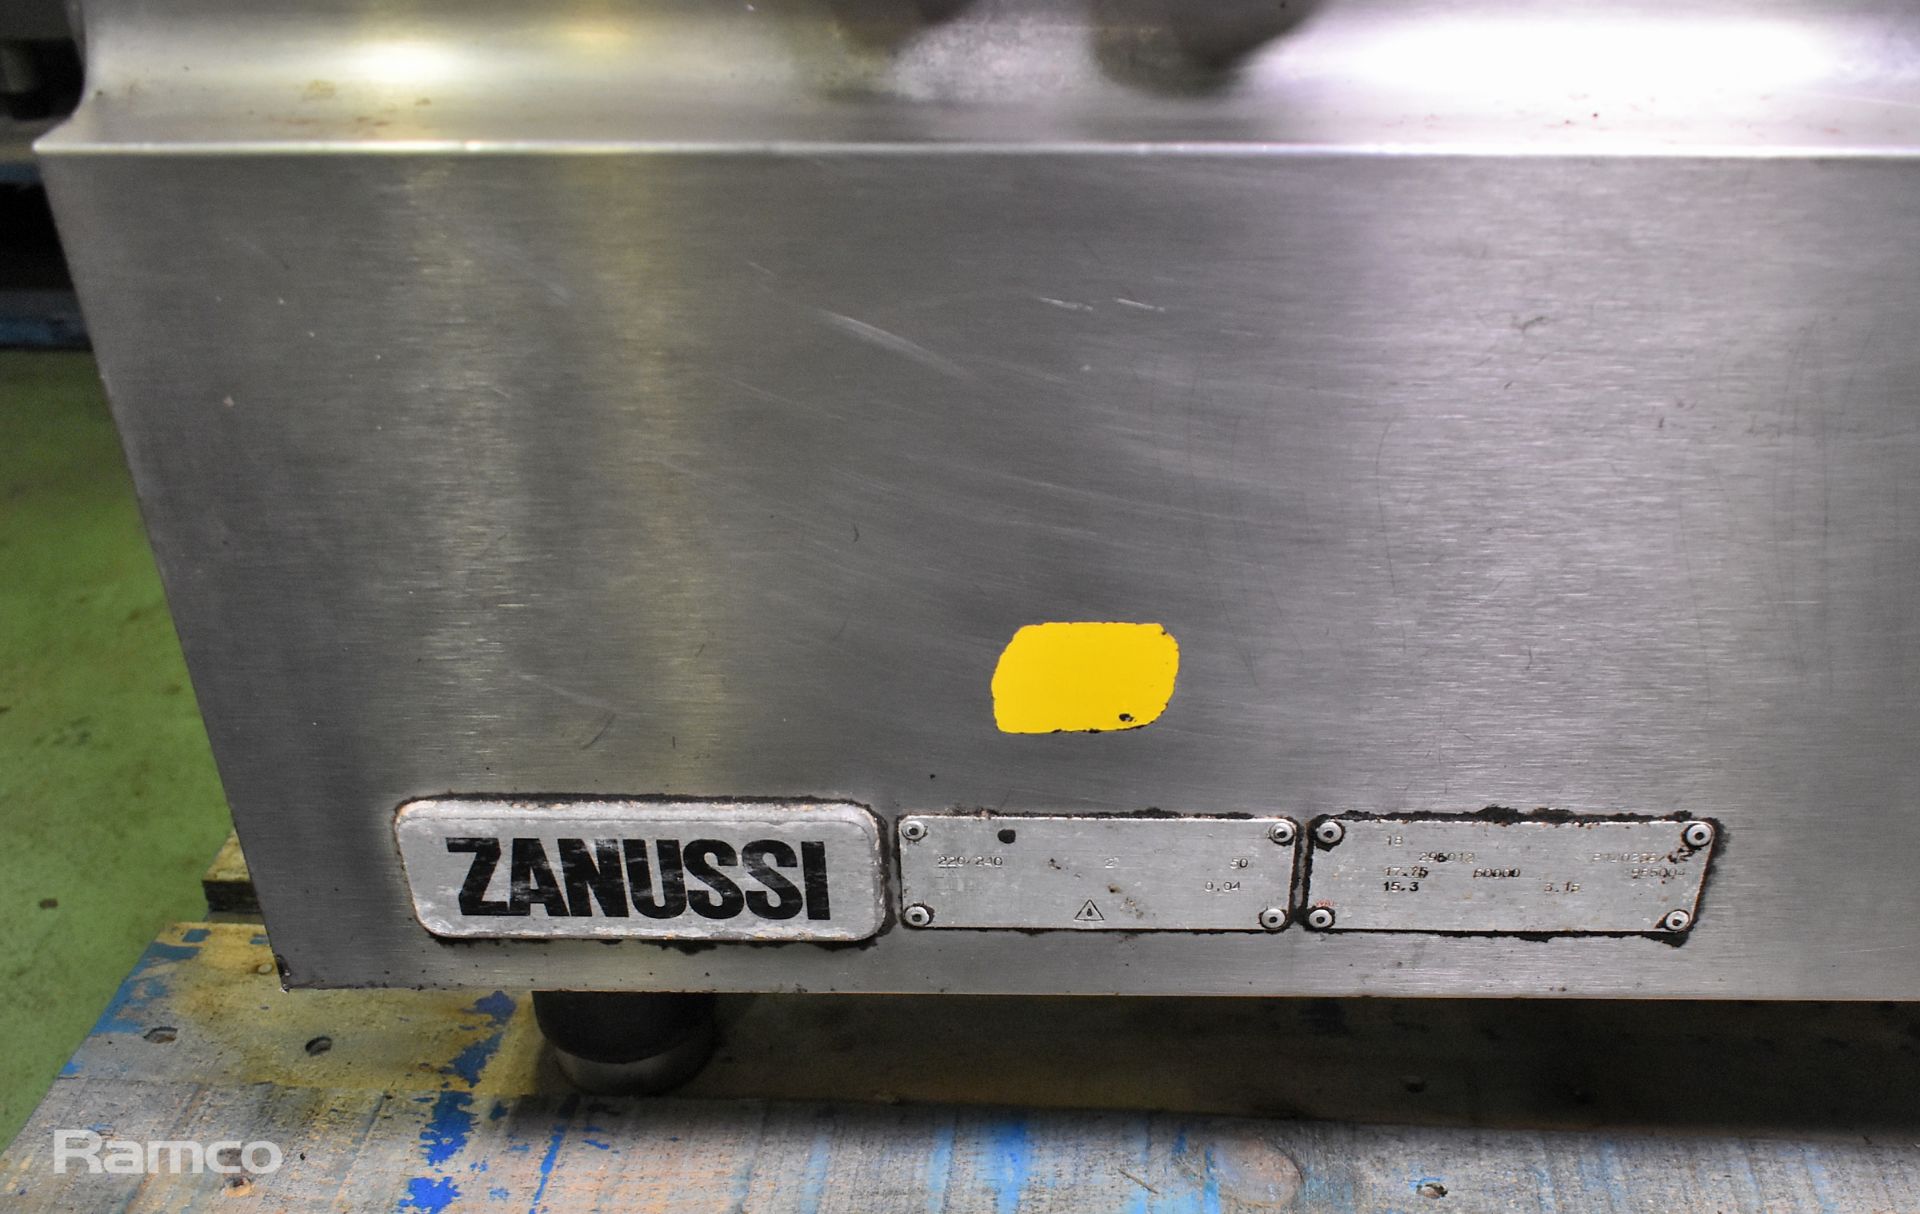 Zanussi model 295012 stainless steel bratt pan, gas - W 800 x D 970 x H 890 mm - Image 6 of 8